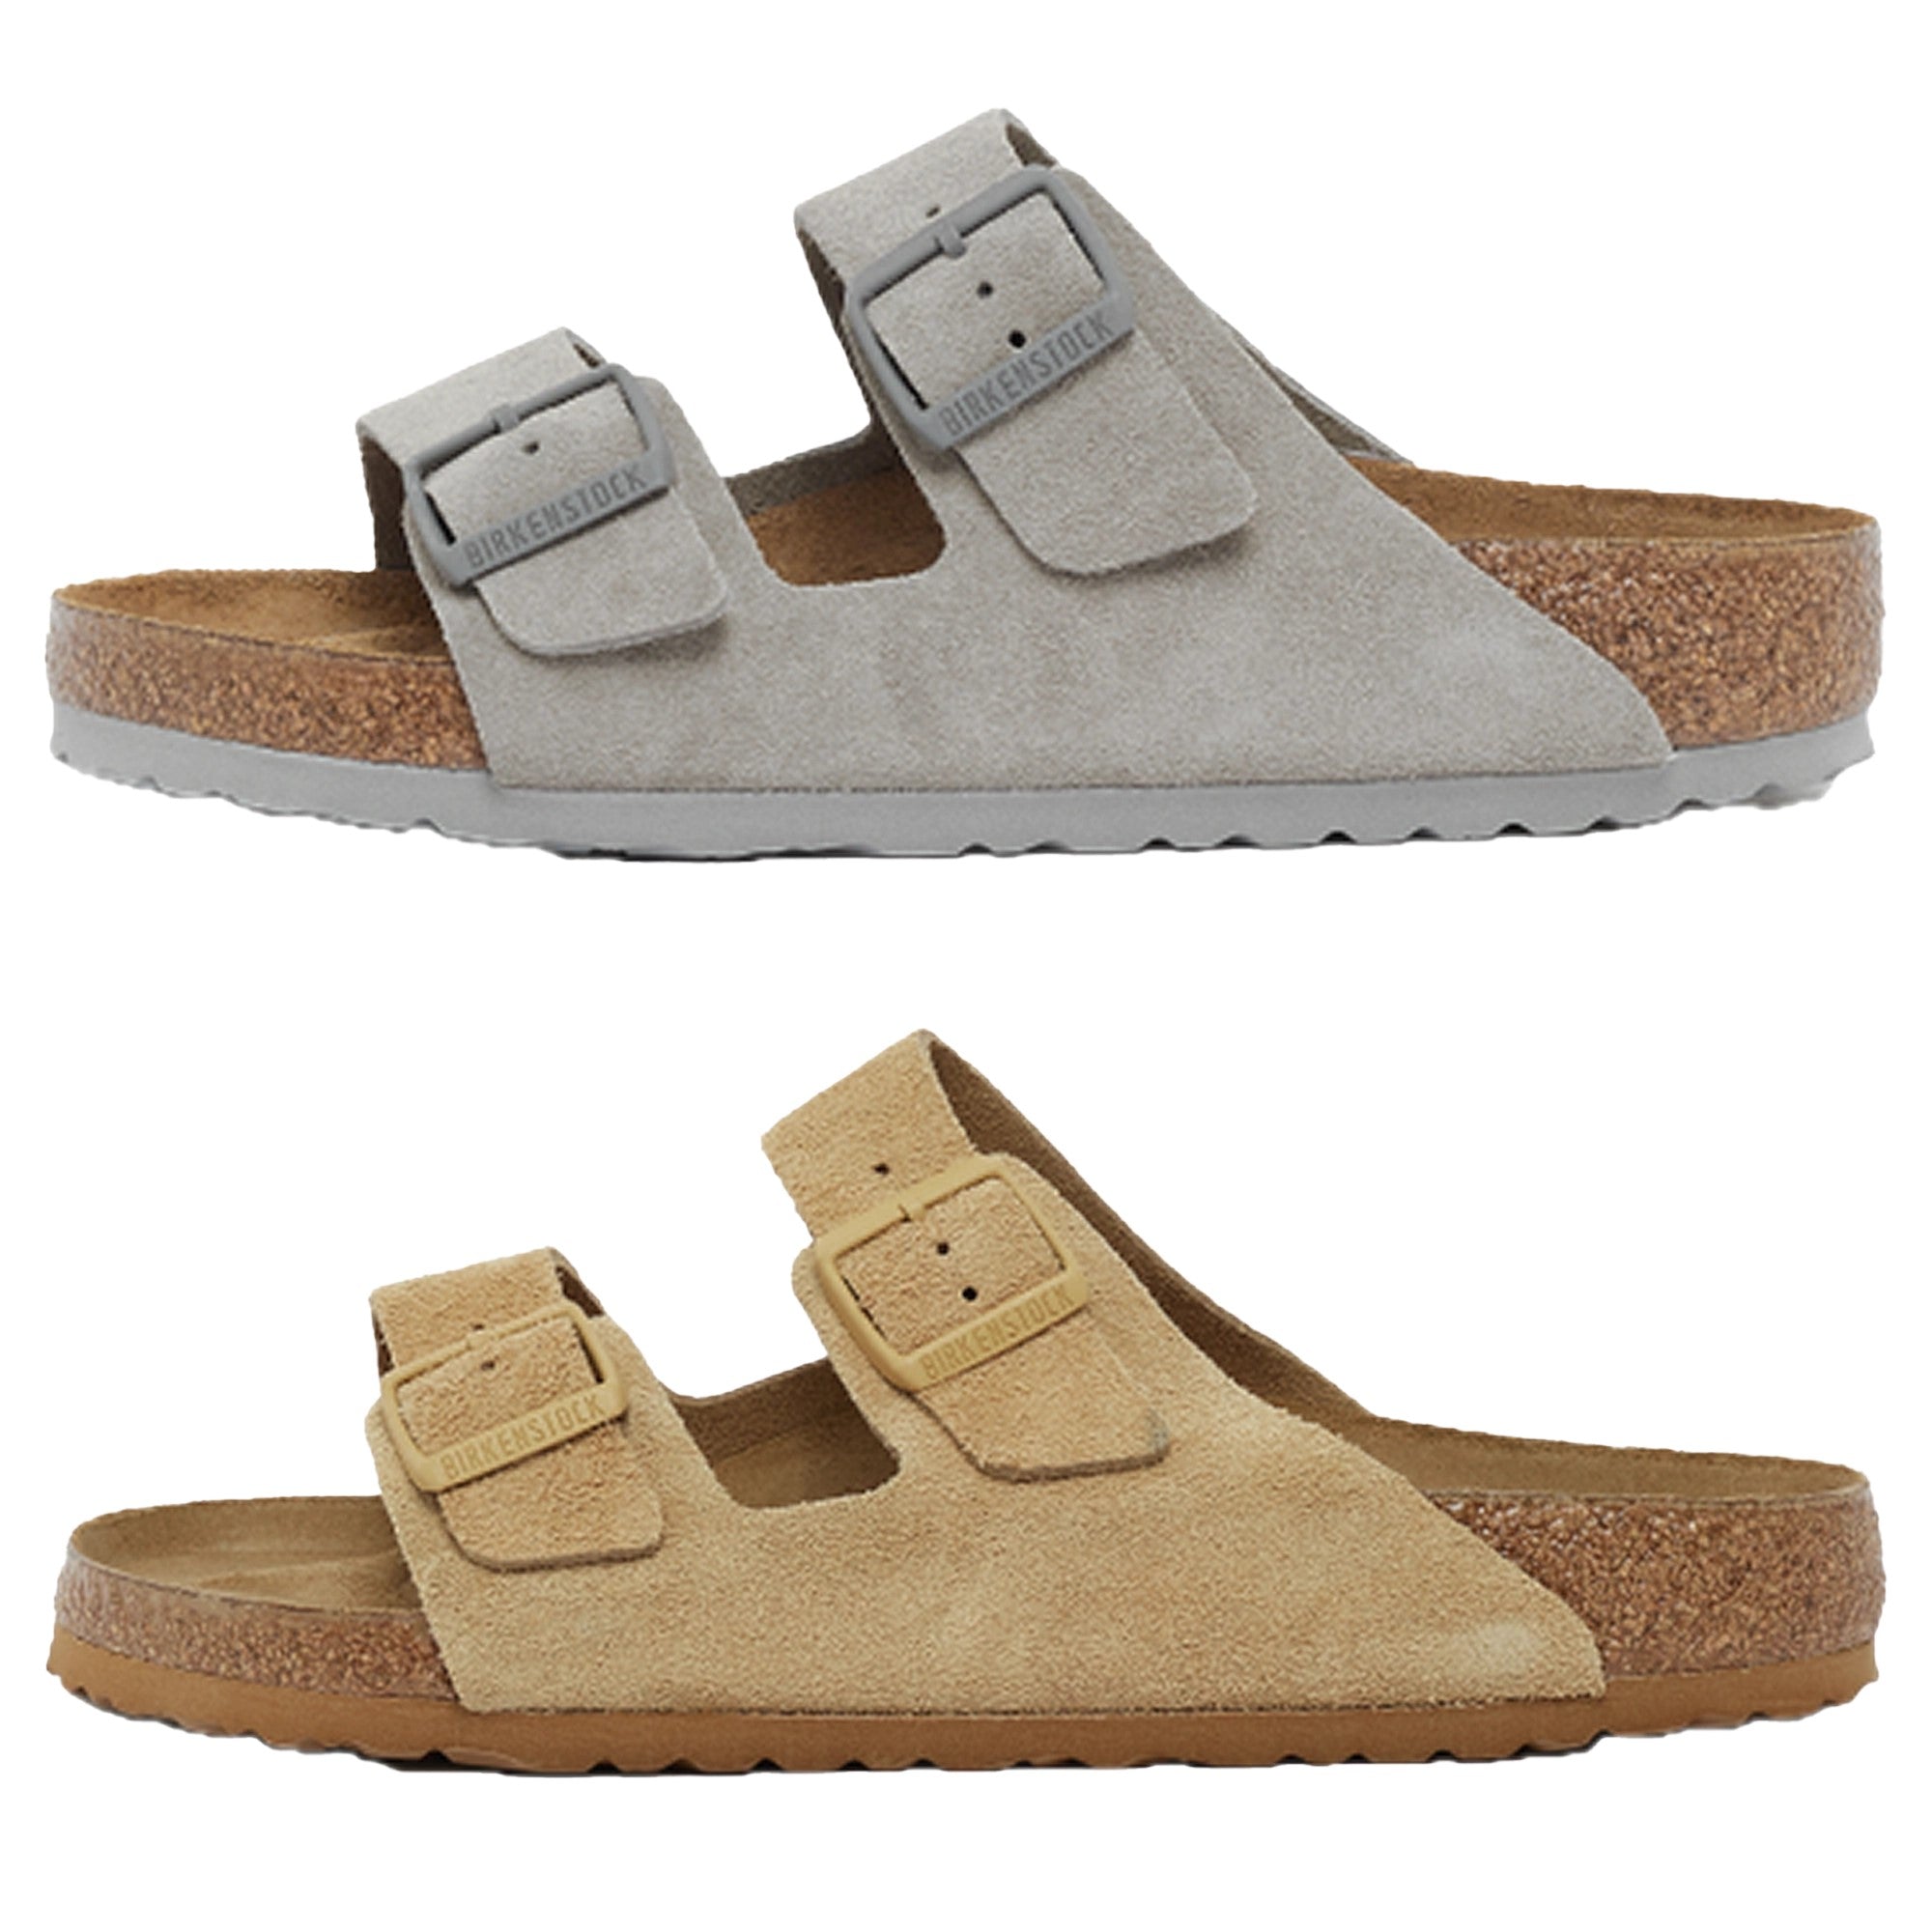 Birkenstock Arizona Suede Leather Sandals Slides Stone Latte Cream Mules Shoes